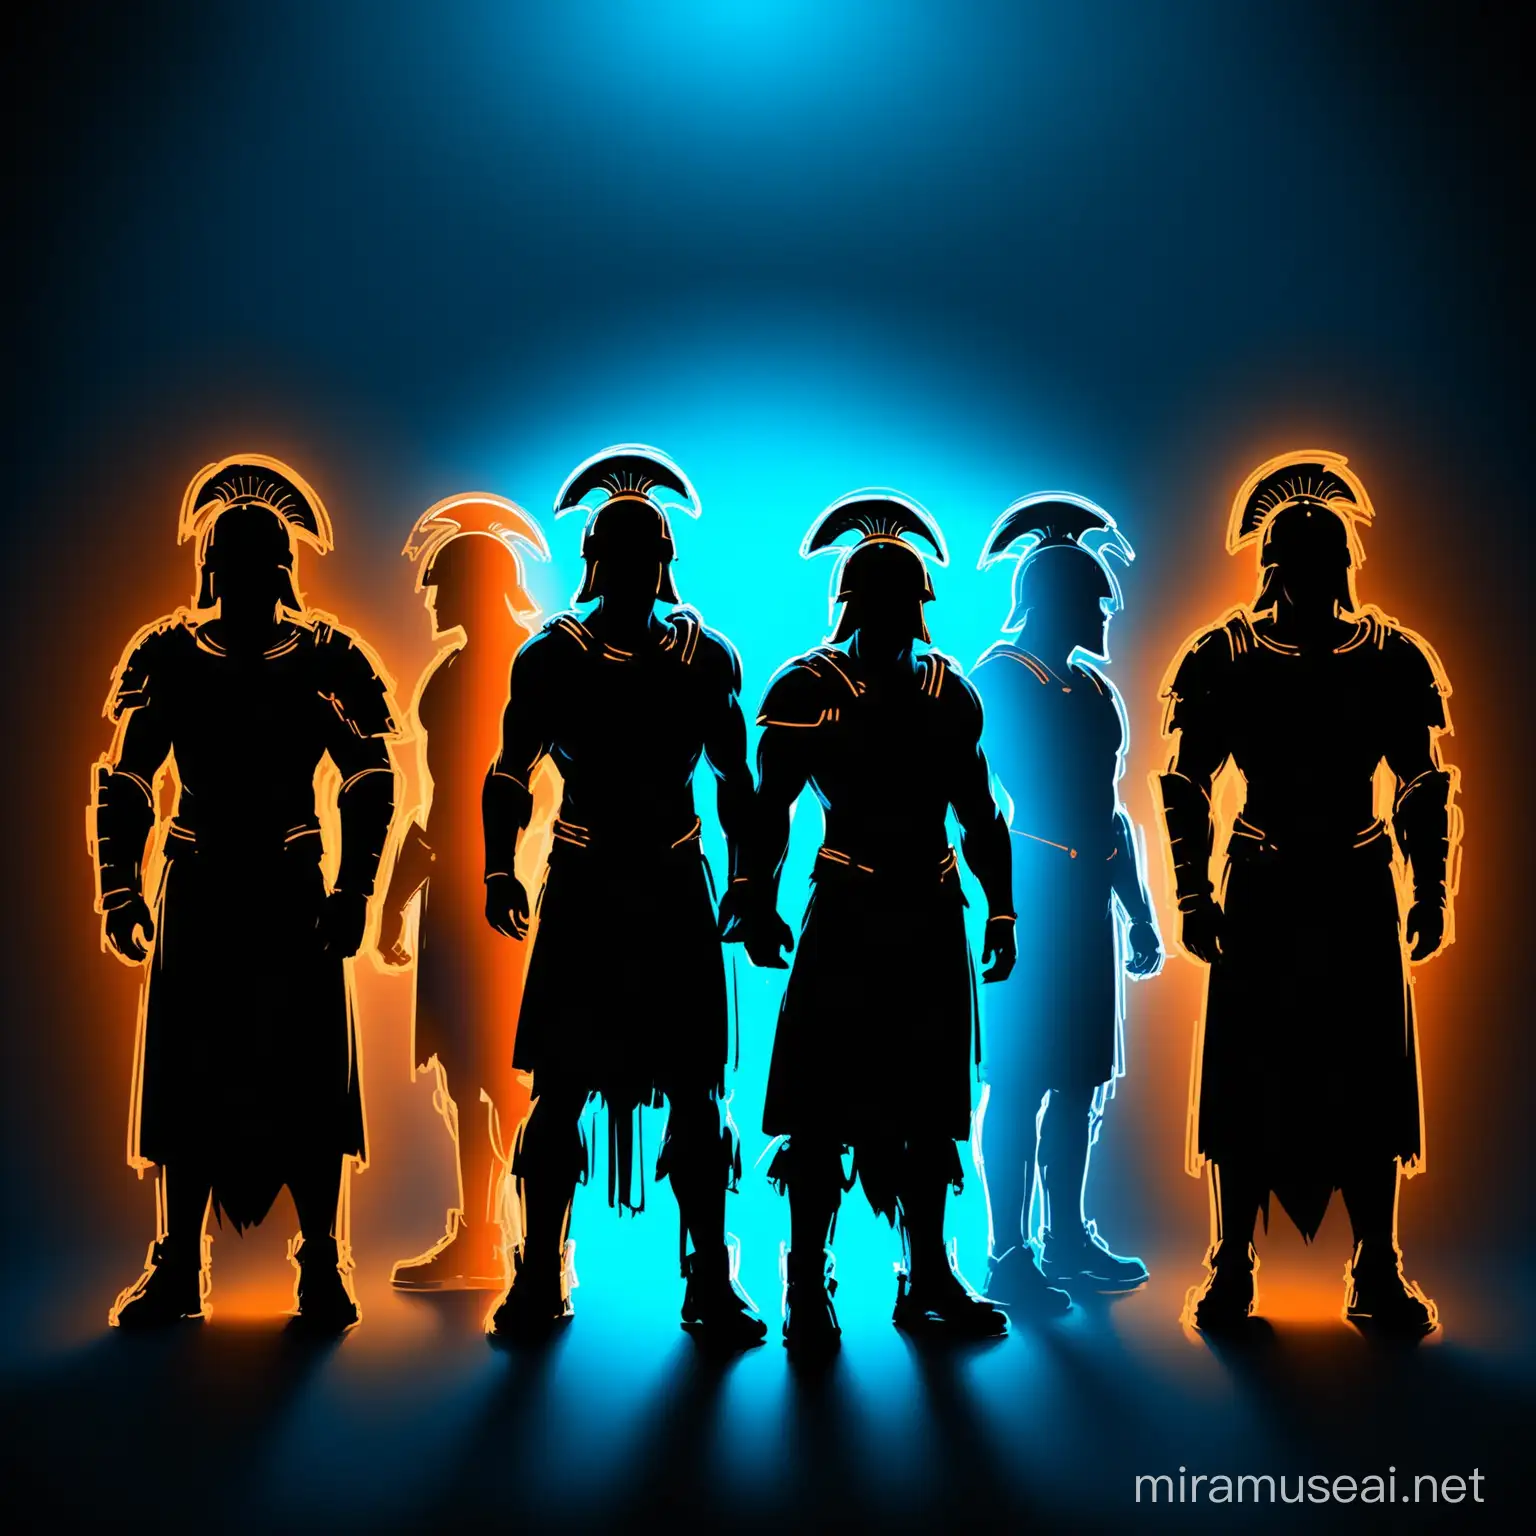 sillouette of a gladiator (group)
appreance- neon white/black/blue/orange/full body/warrior/ gladliator-attire/
background- noir/neon blue/greek/rome/